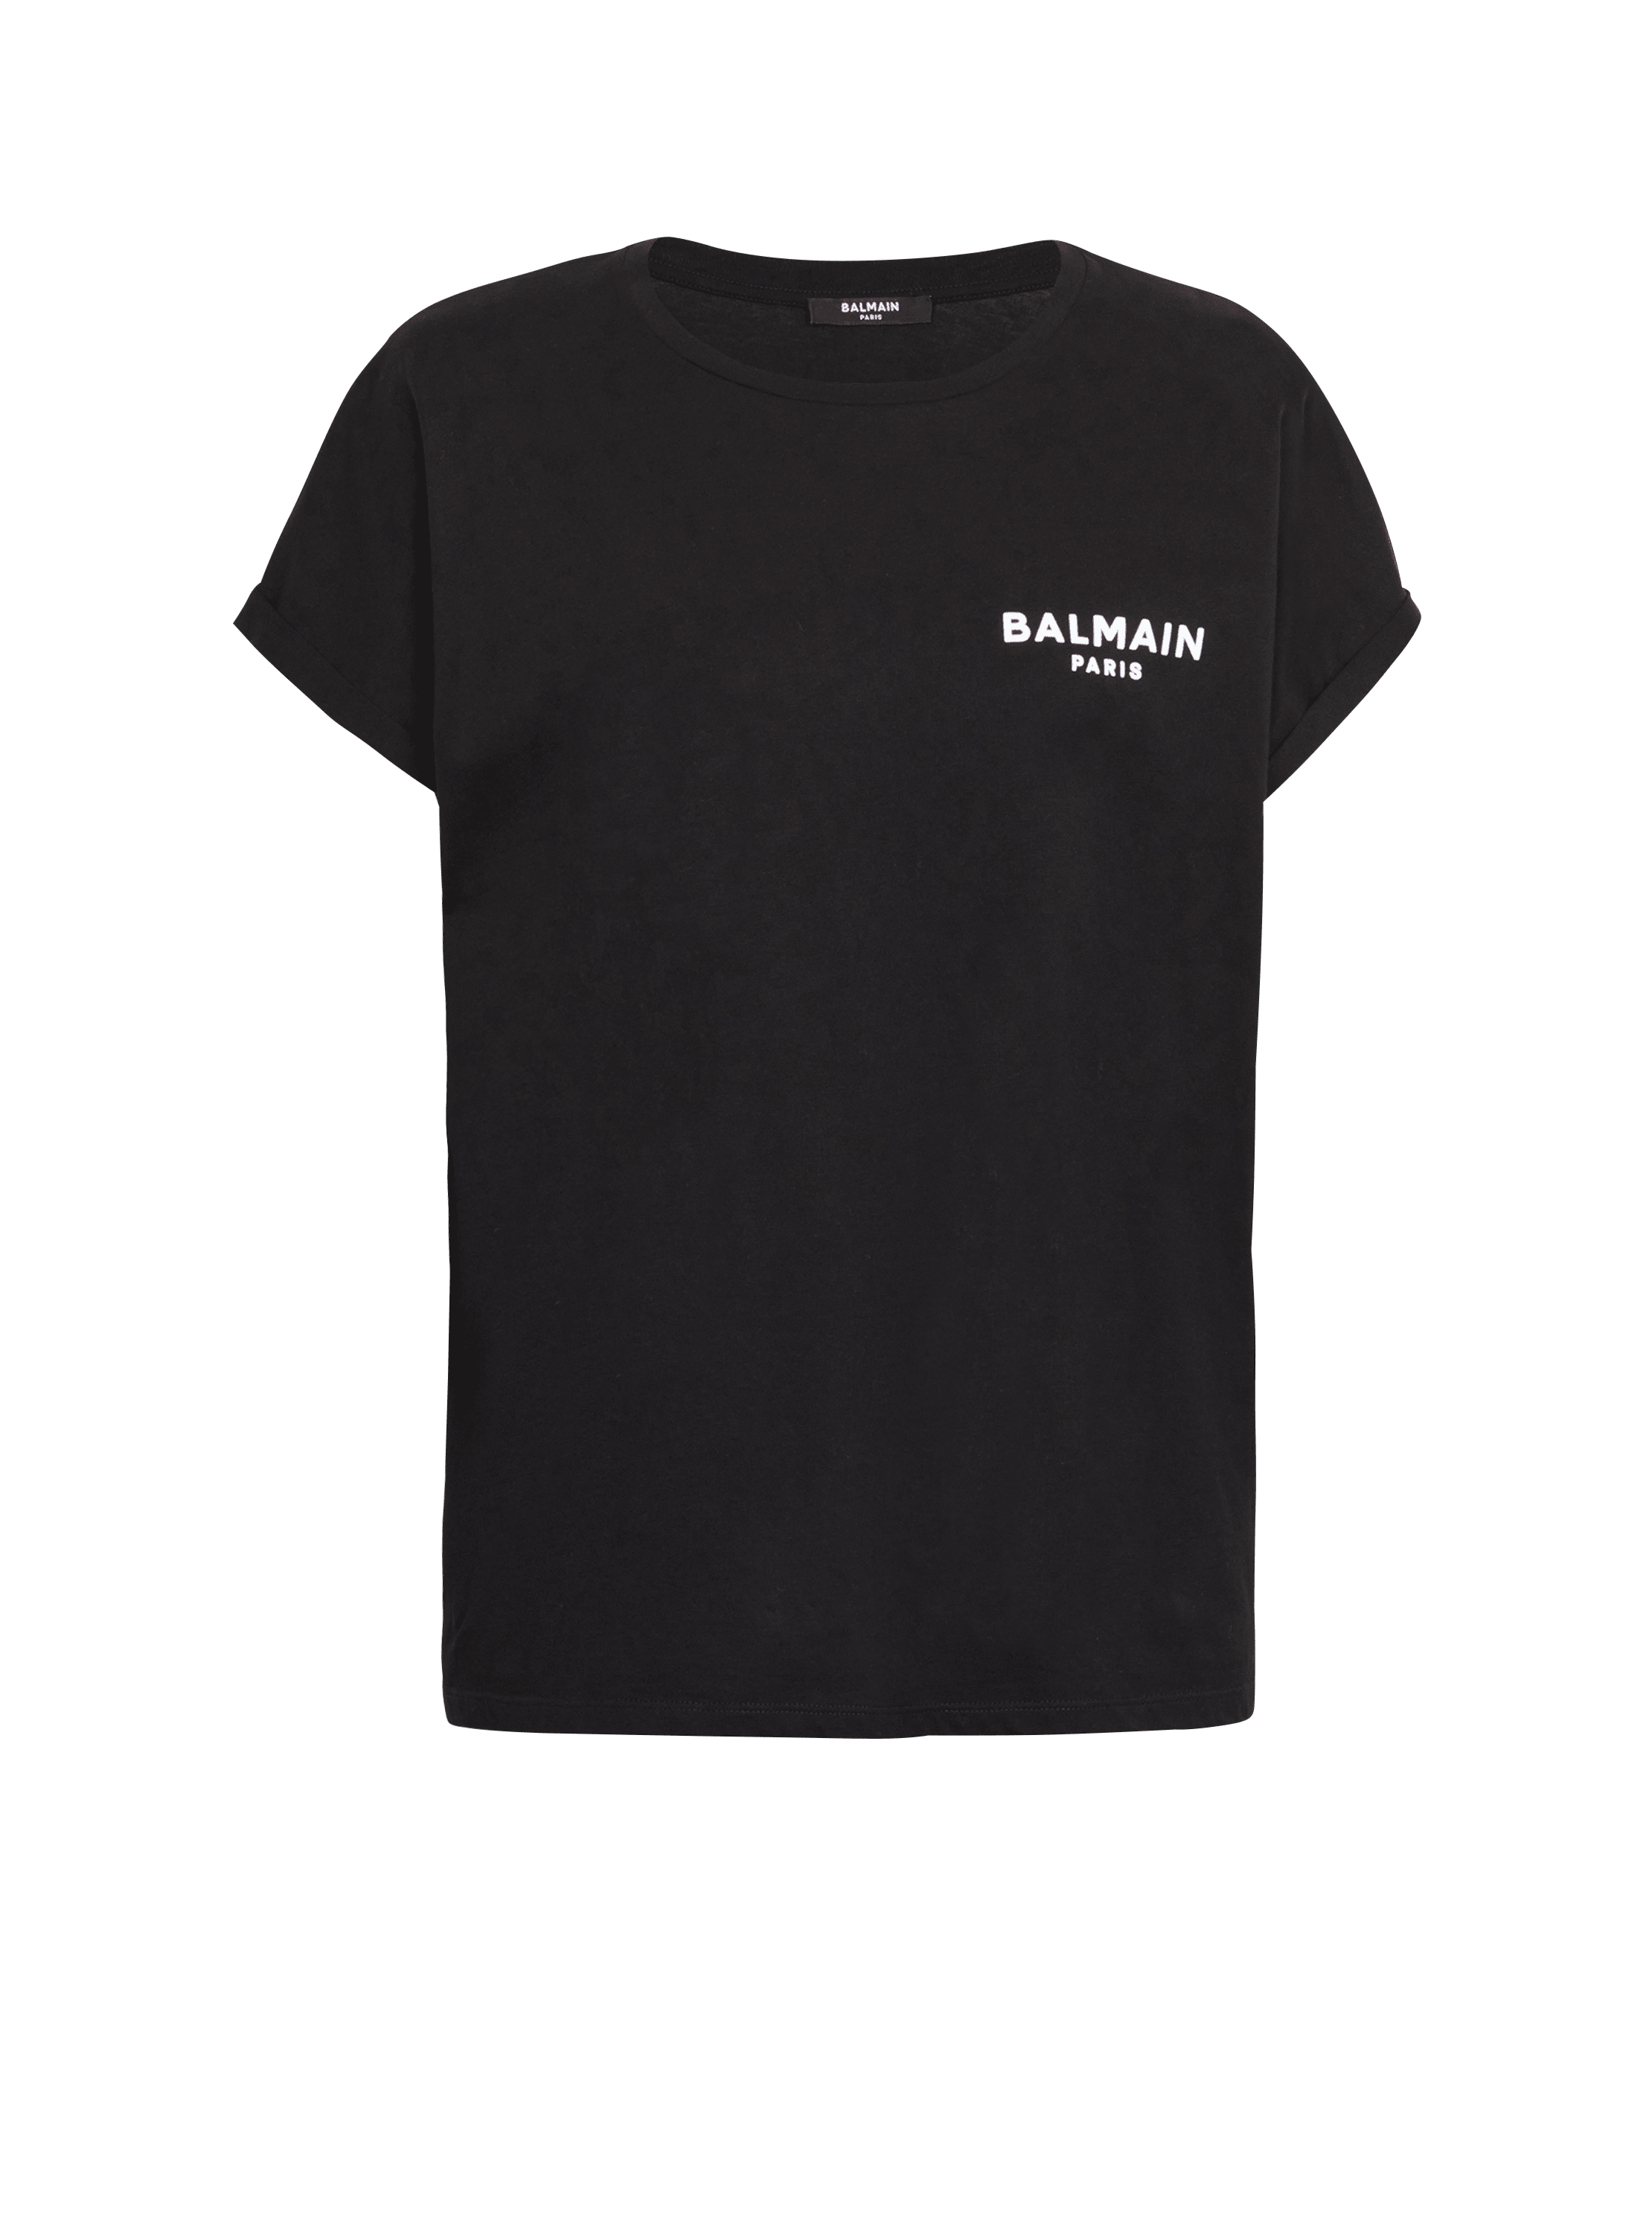 lag Forvirret dateret Eco-designed cotton T-shirt with small flocked Balmain logo - Women |  BALMAIN